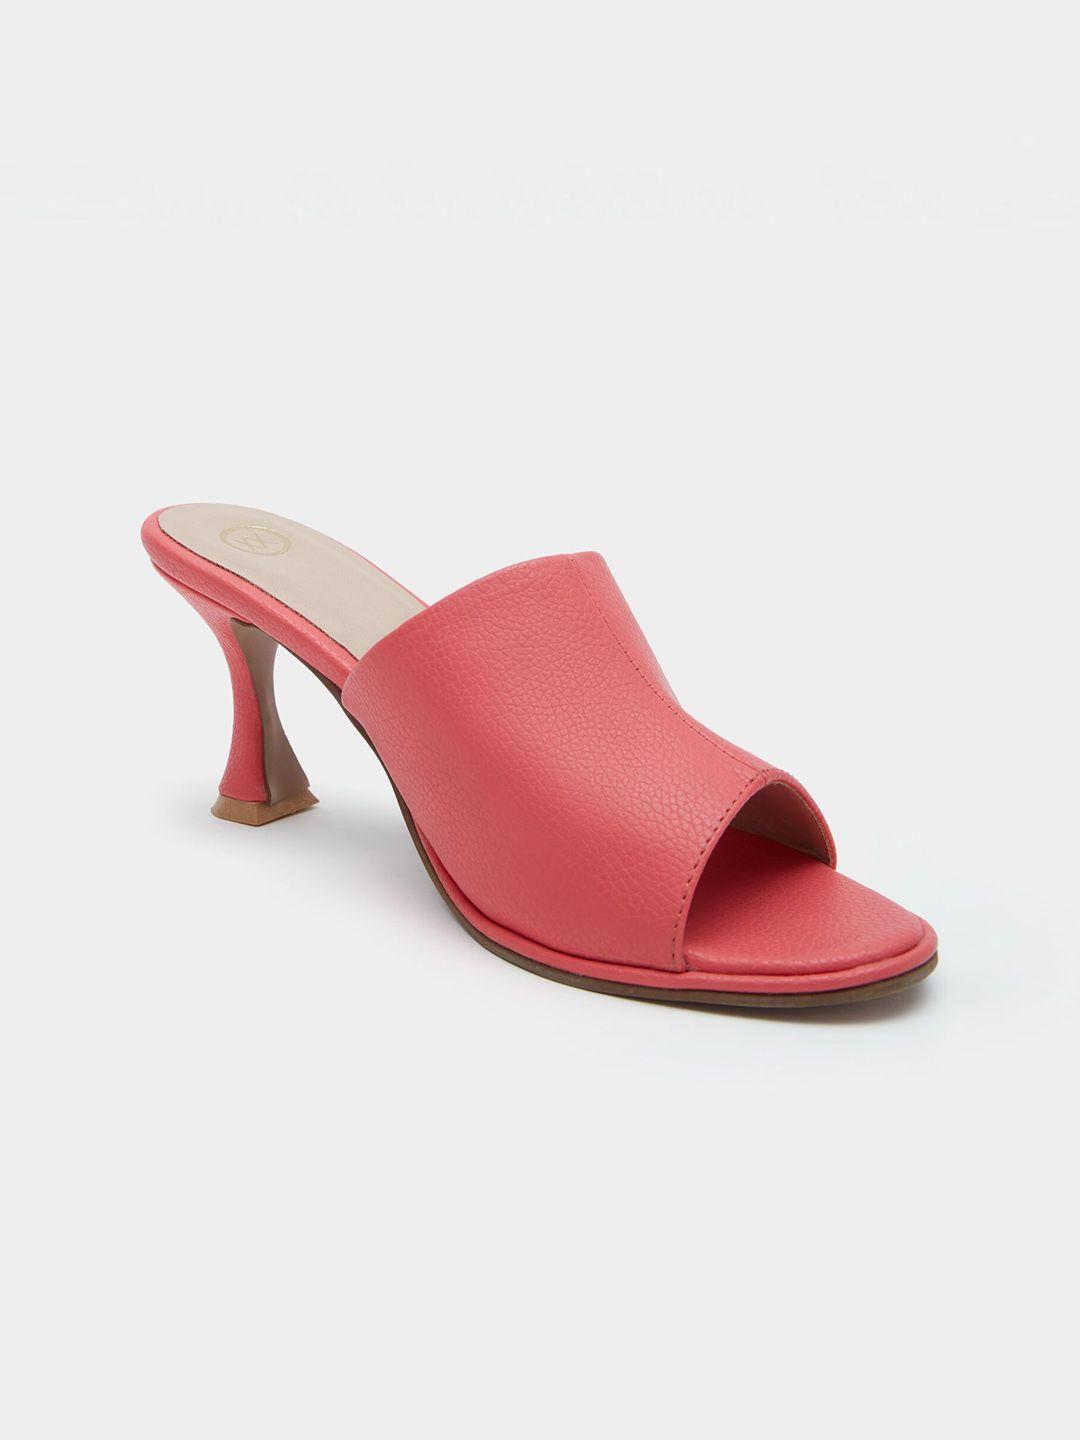 20dresses women solid stiletto heels